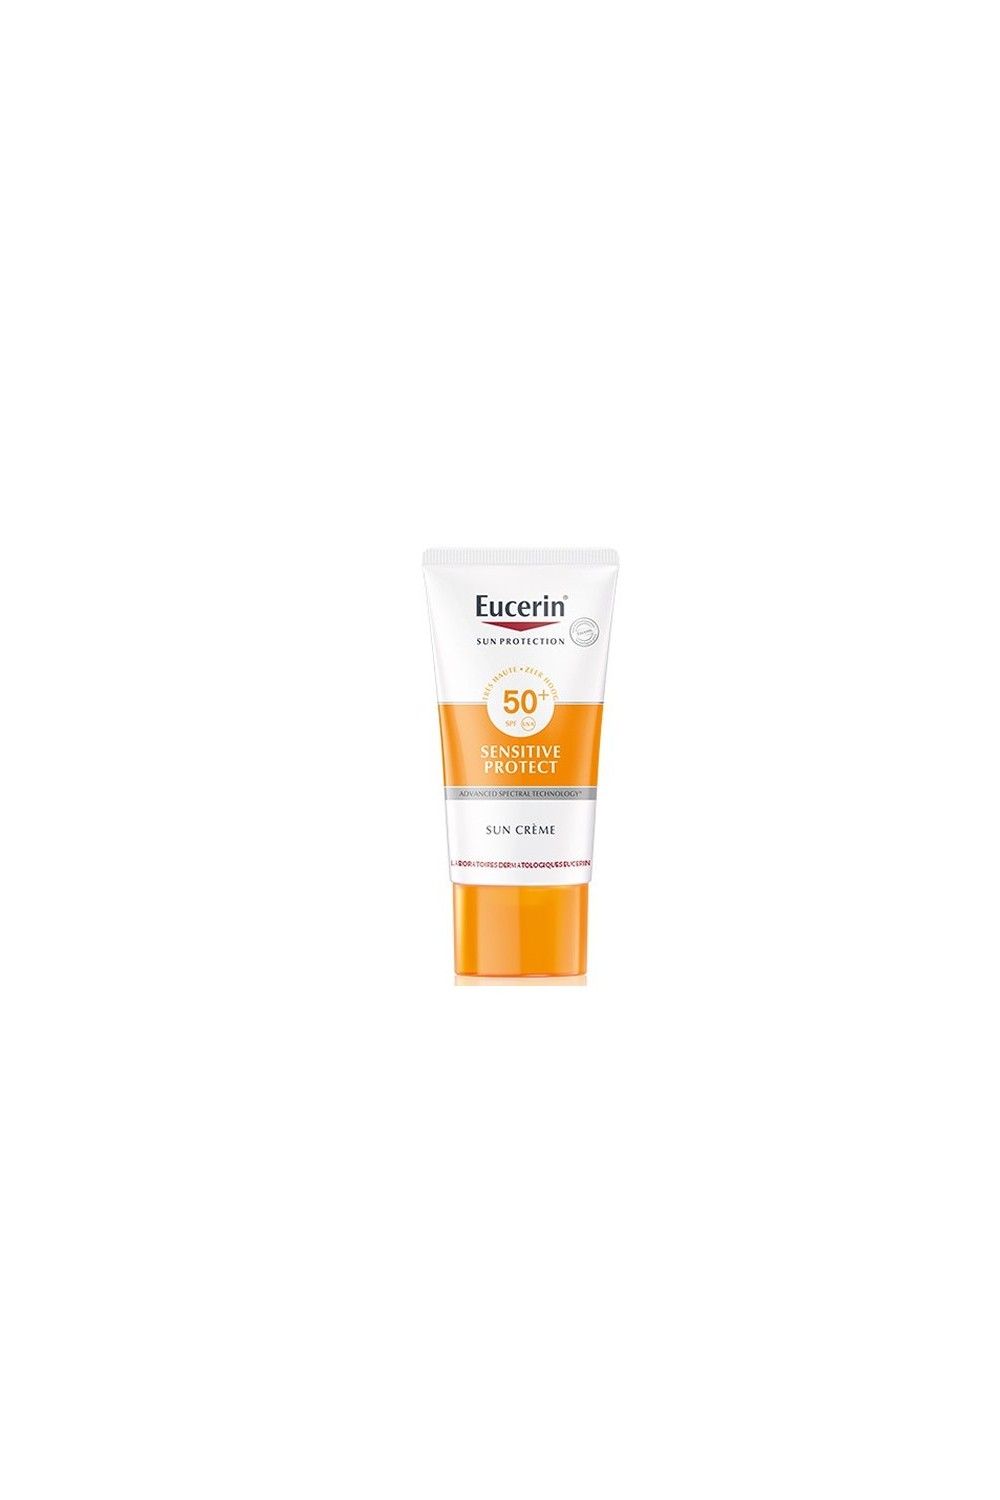 Eucerin Sensitive Protect Sun Creme Spf50+ 50ml